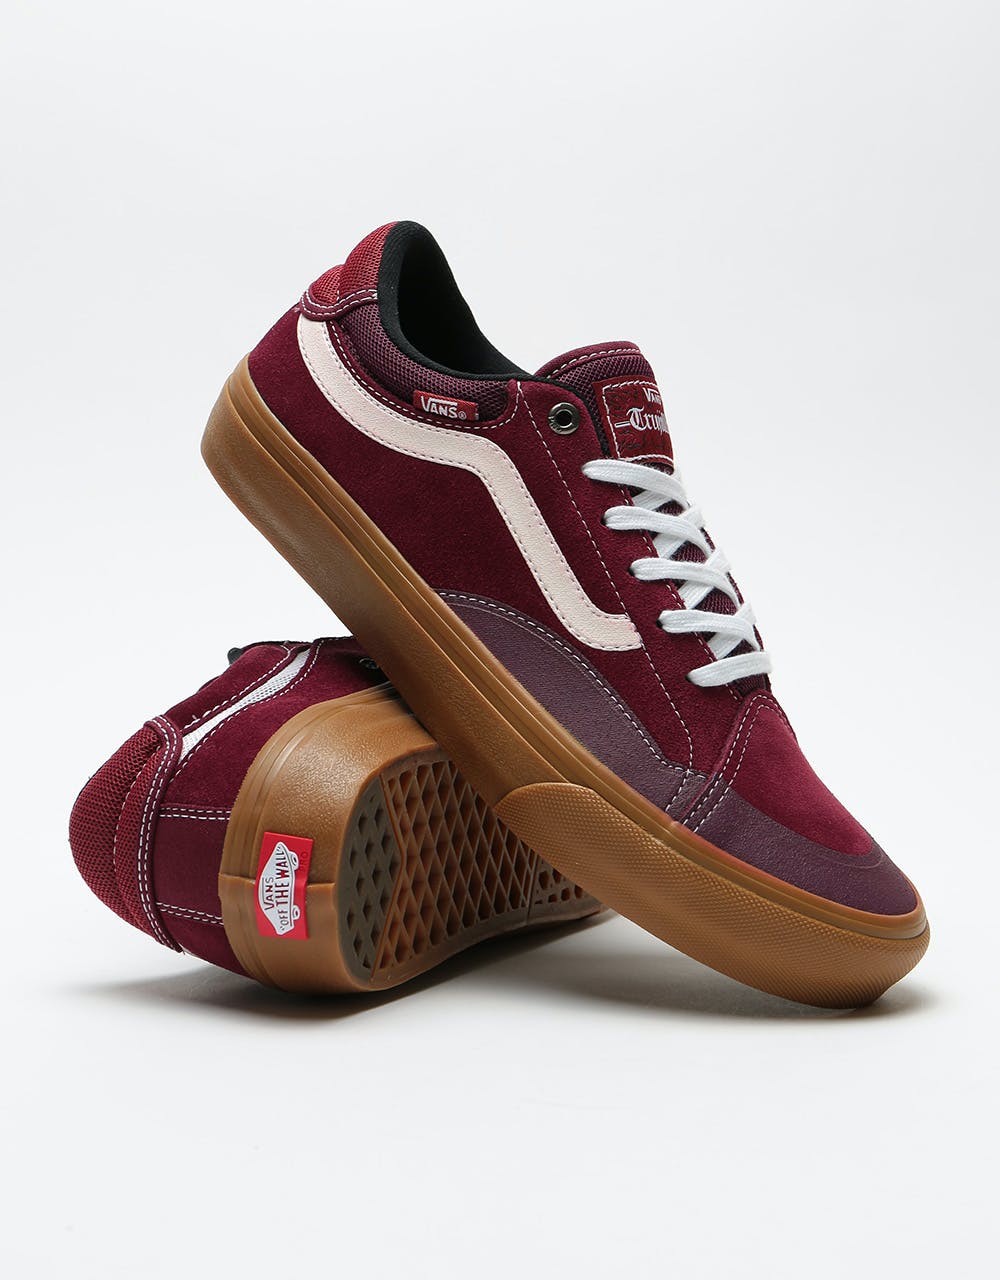 Vans TNT Advanced Prototype Skate Shoes - Port Royale/Rosewood